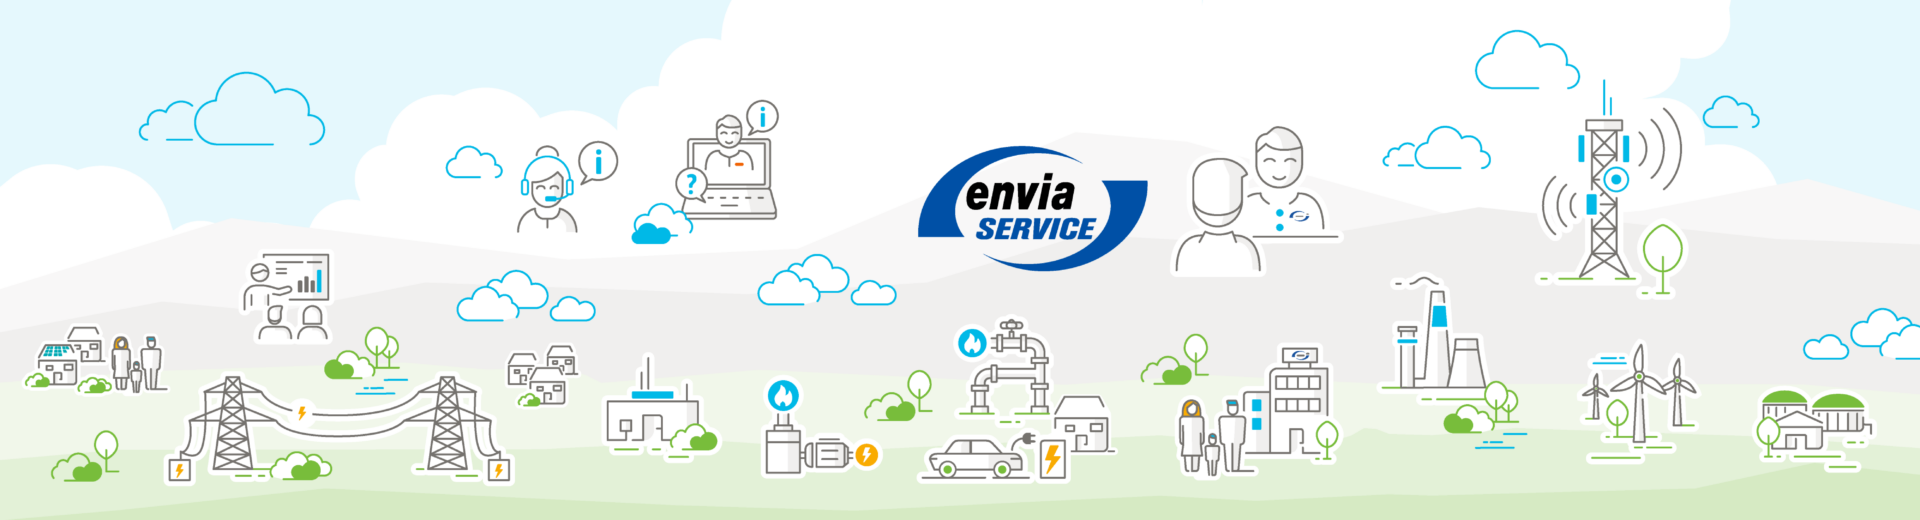 Grafik enviaM-Gruppe mit envia SERVICE